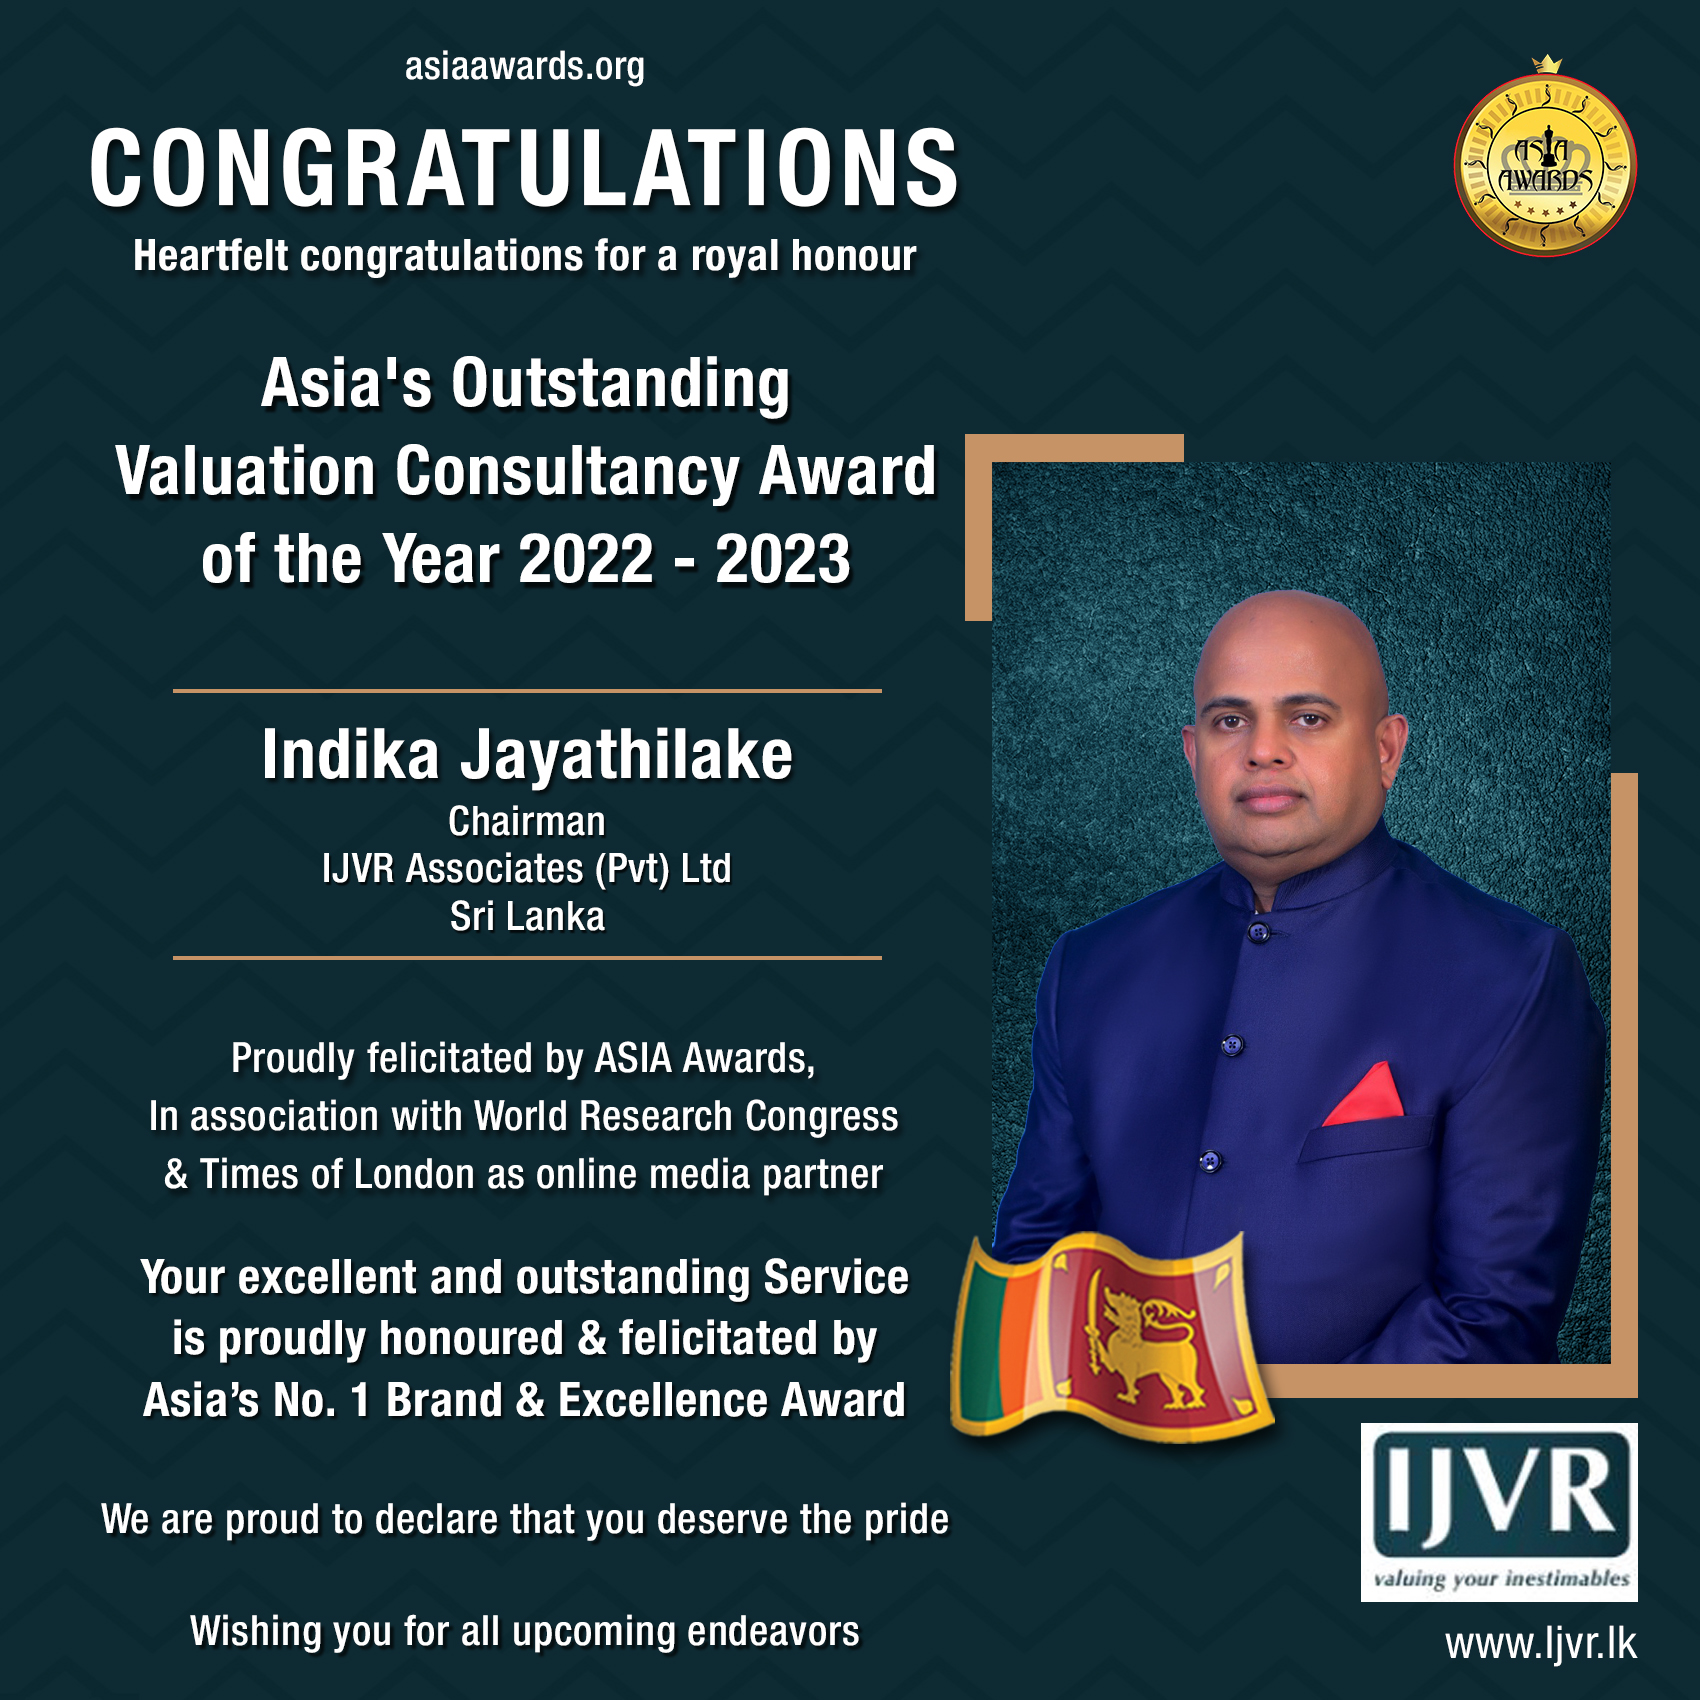 Indika Jayathilake has bagged Asia's Outstanding Valuation Consultancy Award